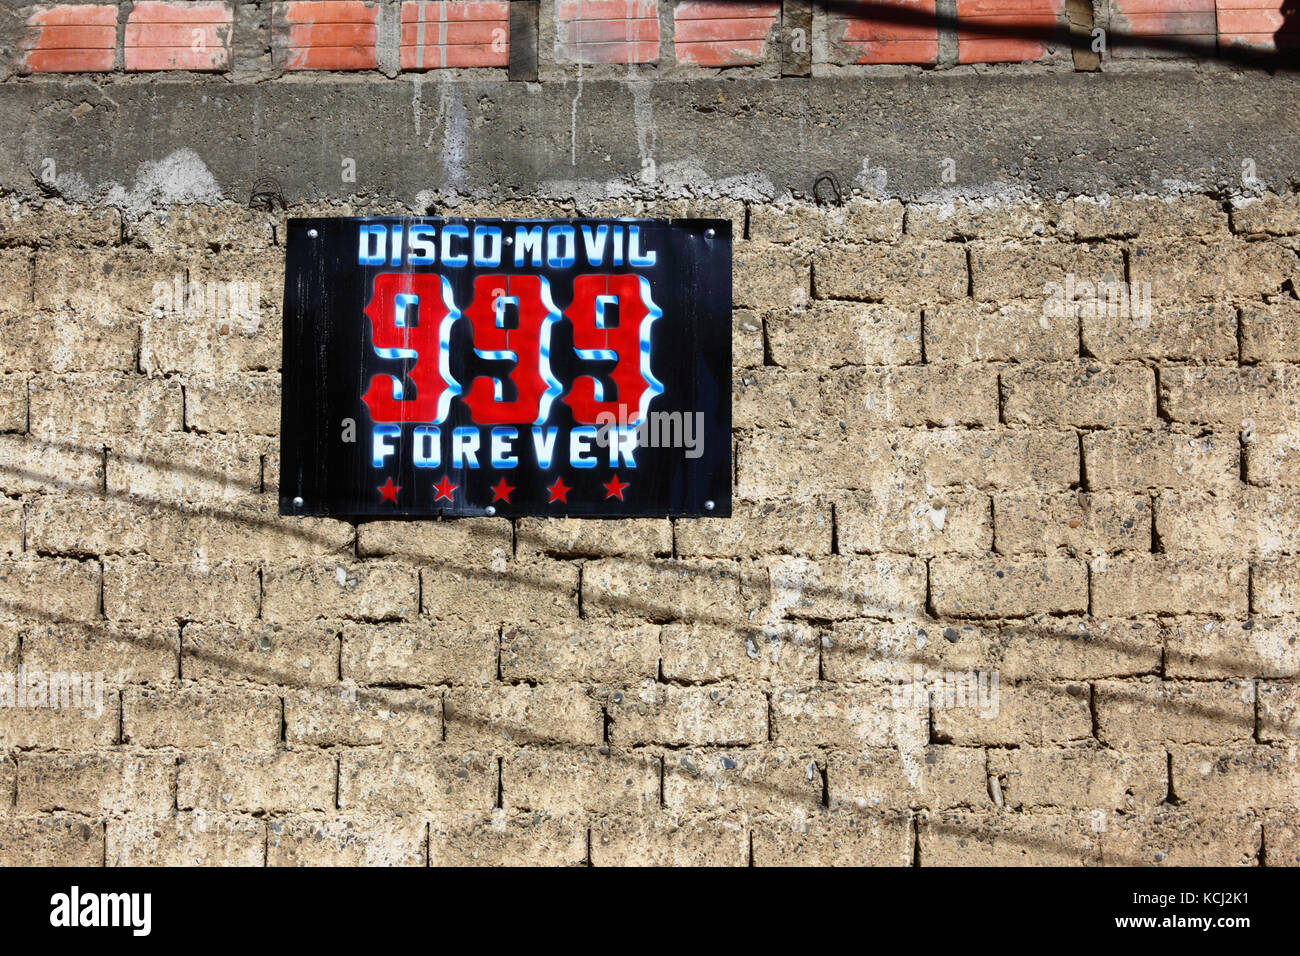 Mobile Disco 999 Forever sign on brick and adobe / mudbrick wall, El Alto, Bolivia Stock Photo